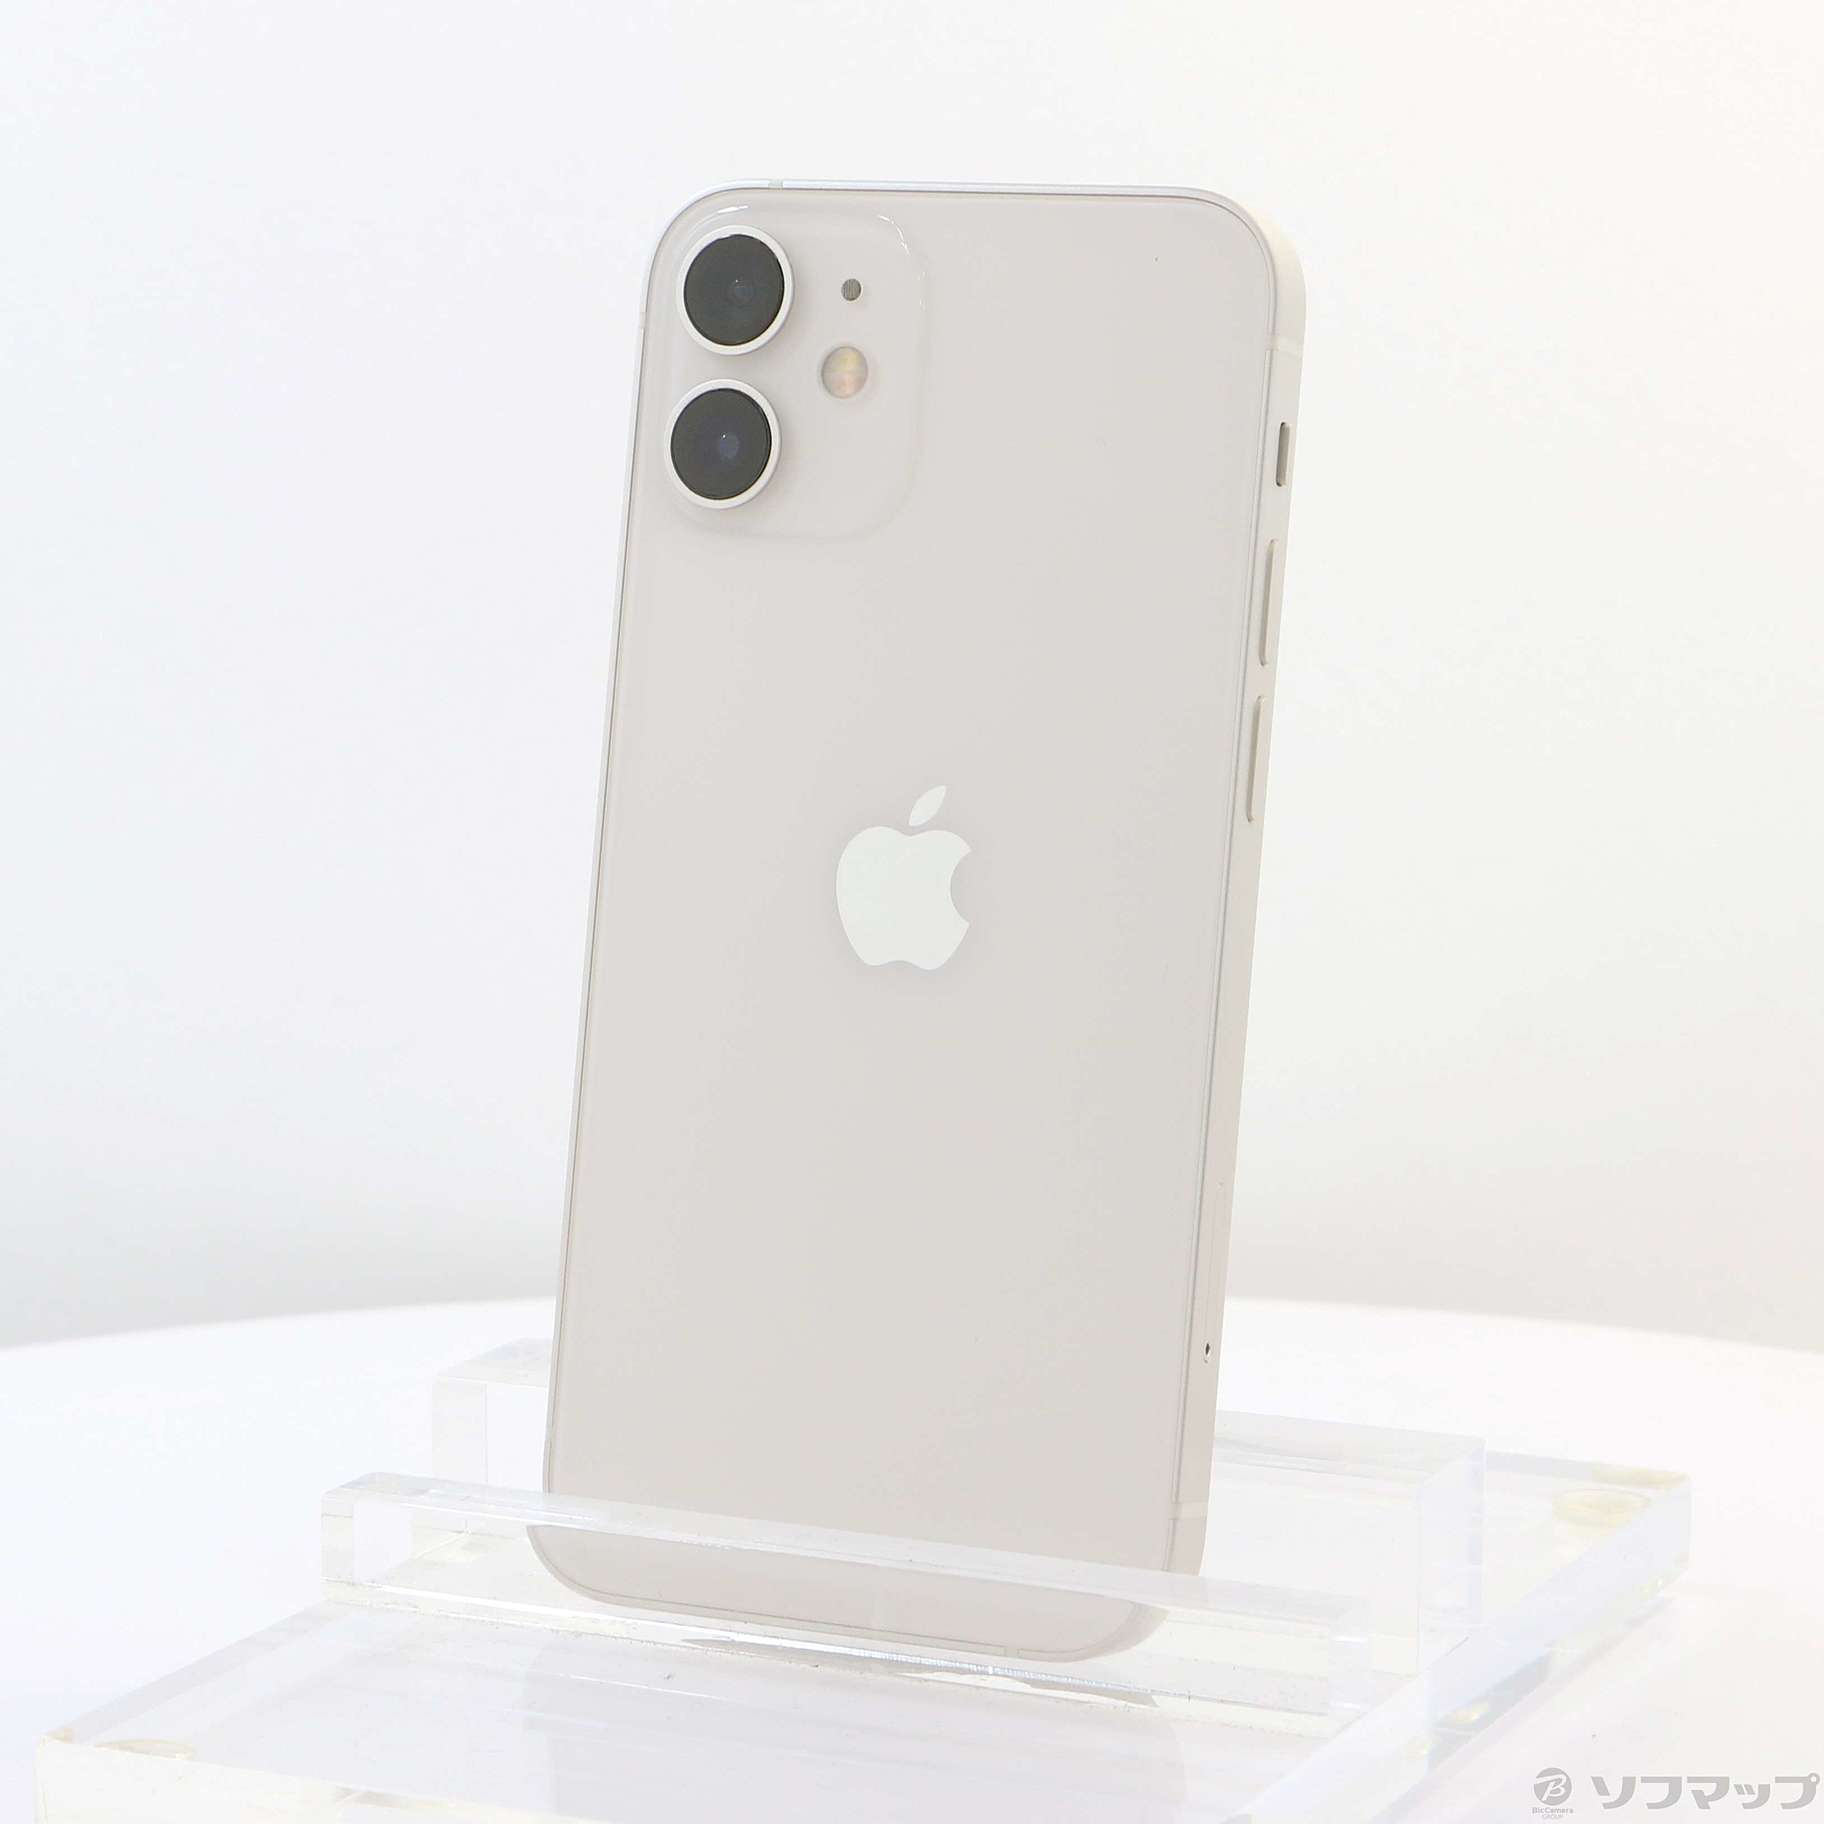 iPhone 12 mini 256GB SIMフリー [ホワイト] 中古(白ロム)価格比較 ...